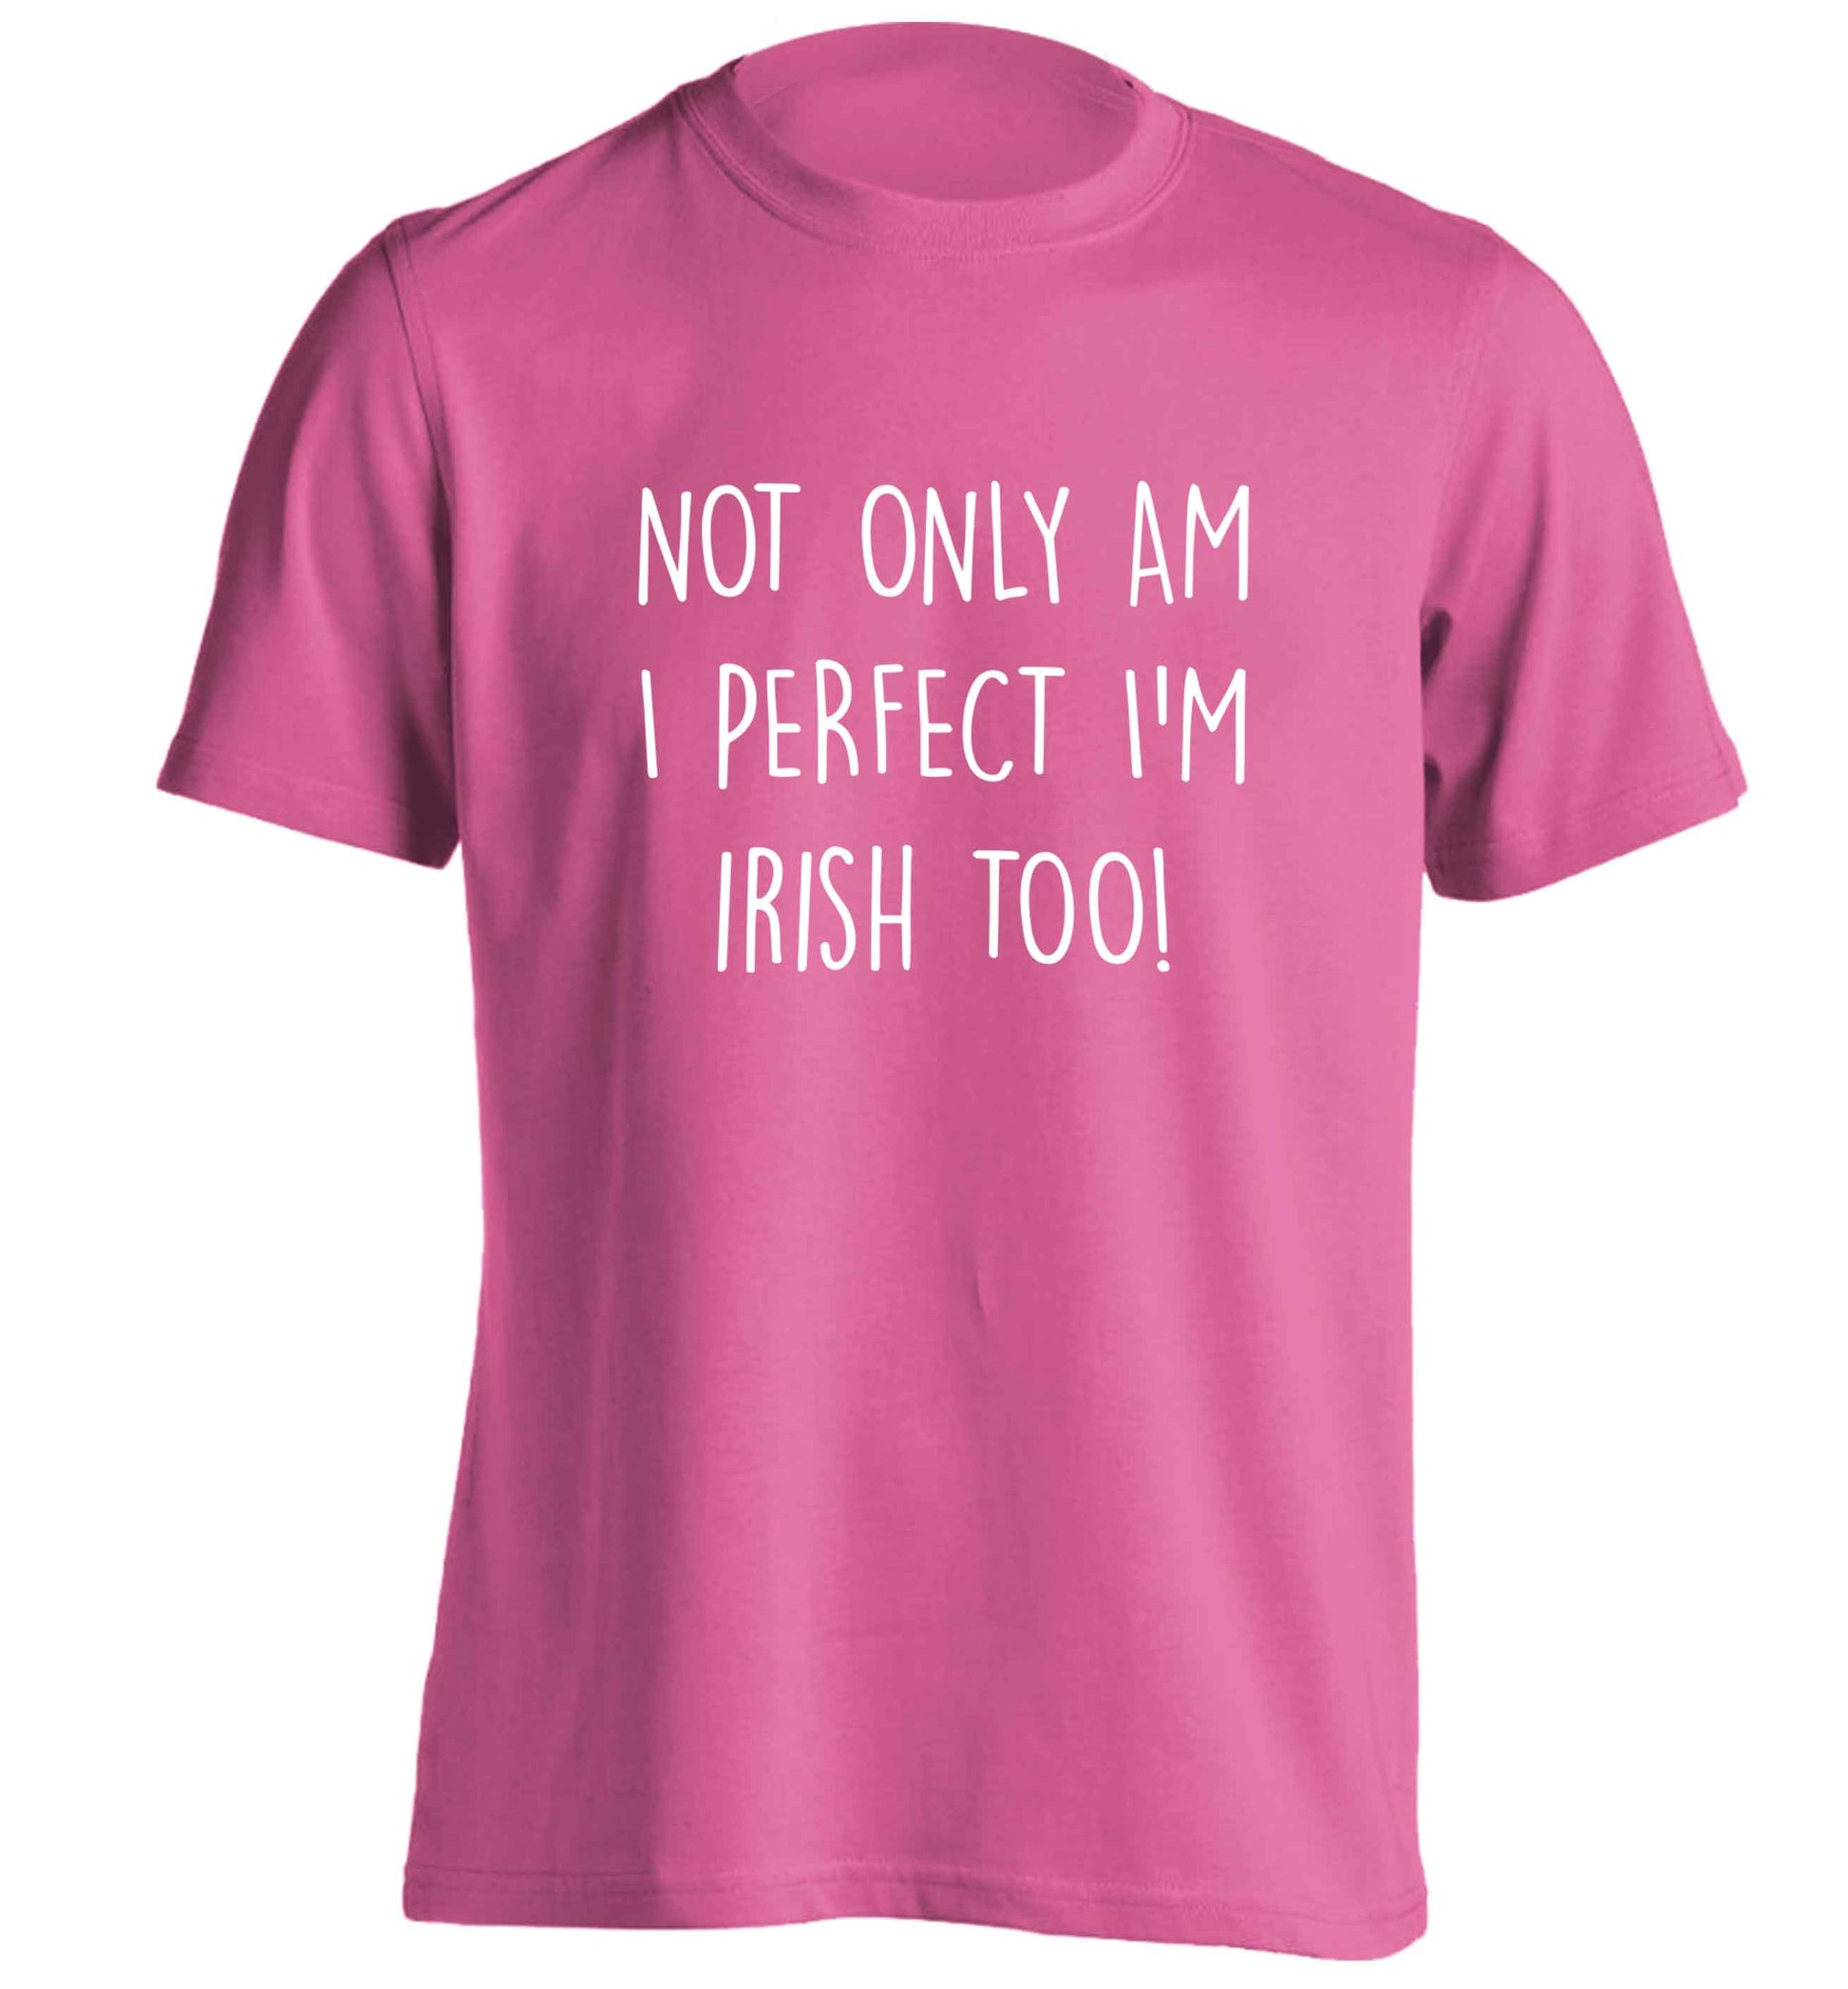 Not only am I perfect I'm Irish too! adults unisex pink Tshirt 2XL